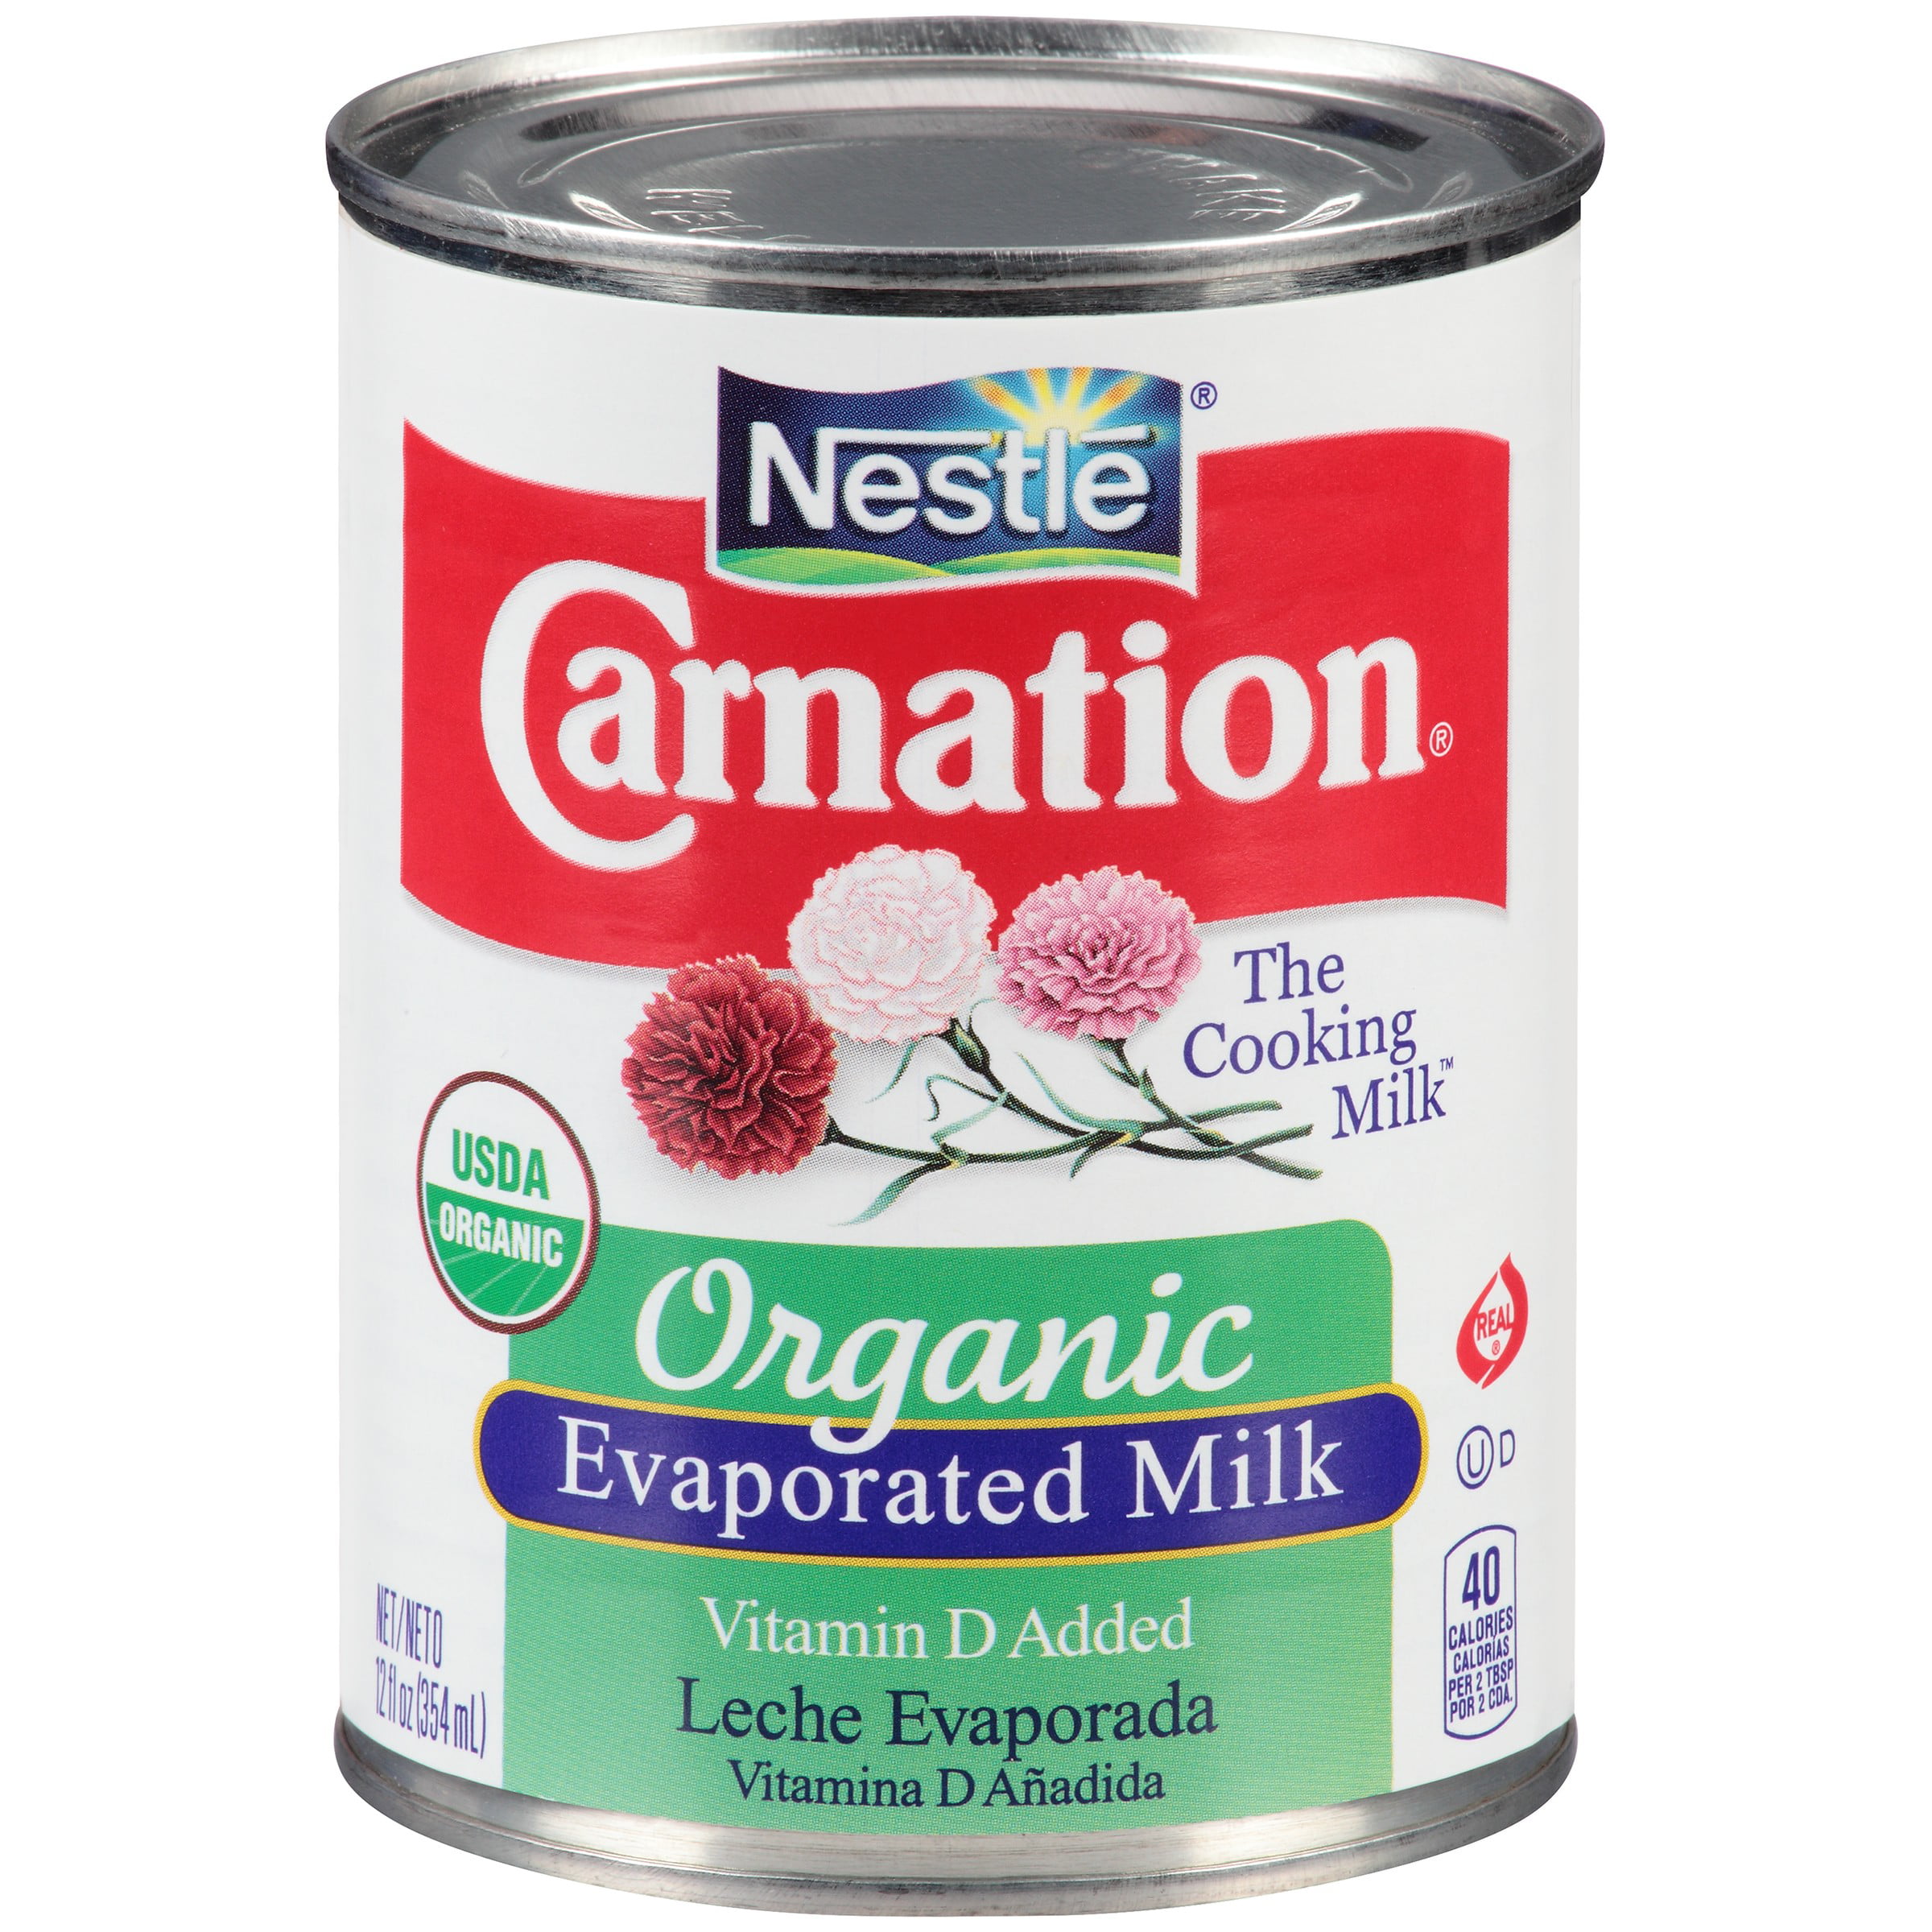 CARNATION Organic Evaporated Milk 12 fl oz Can Walmart com 